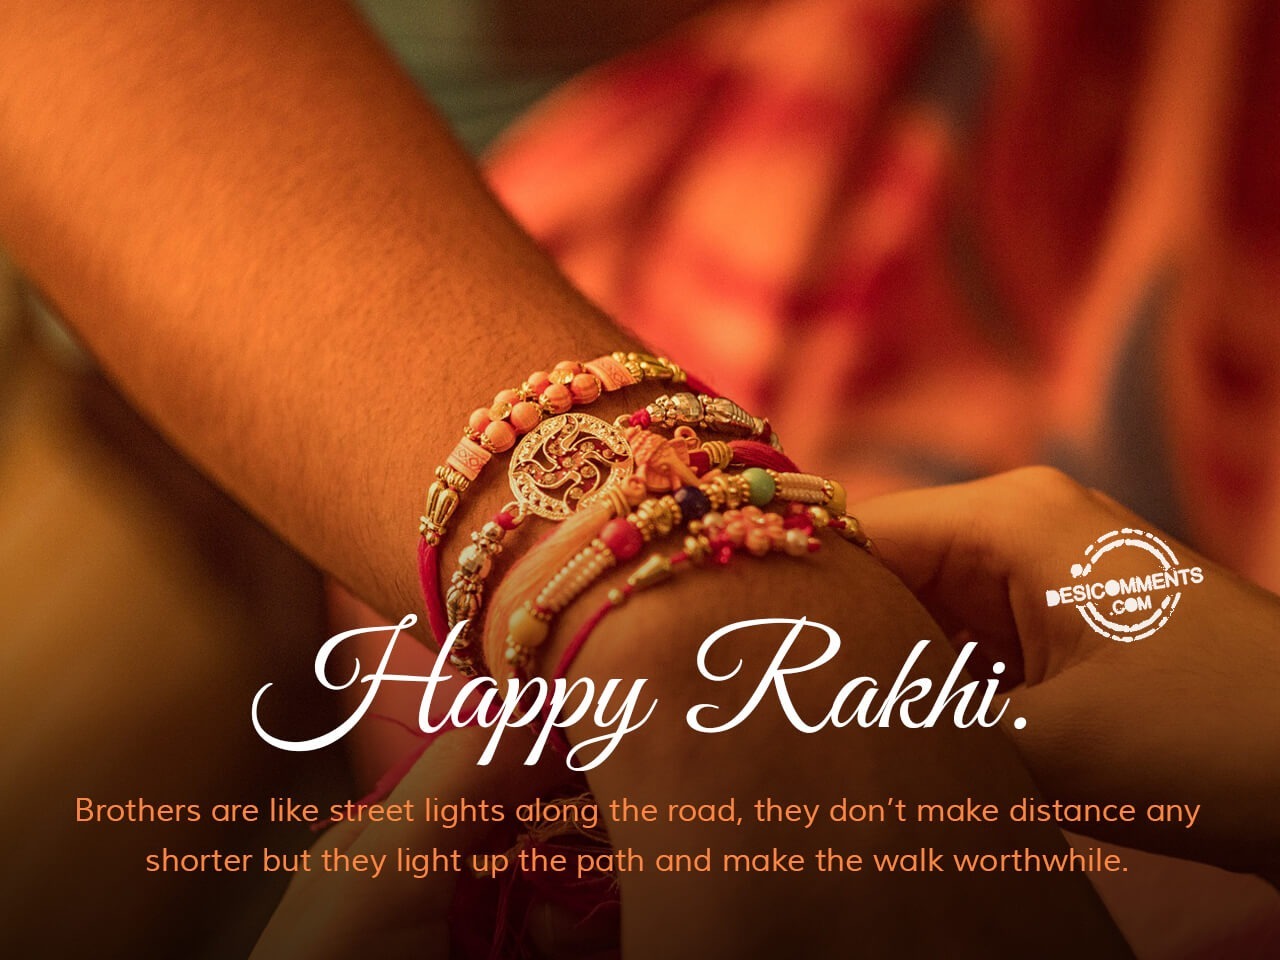 Happy Rakhi - DesiComments.com